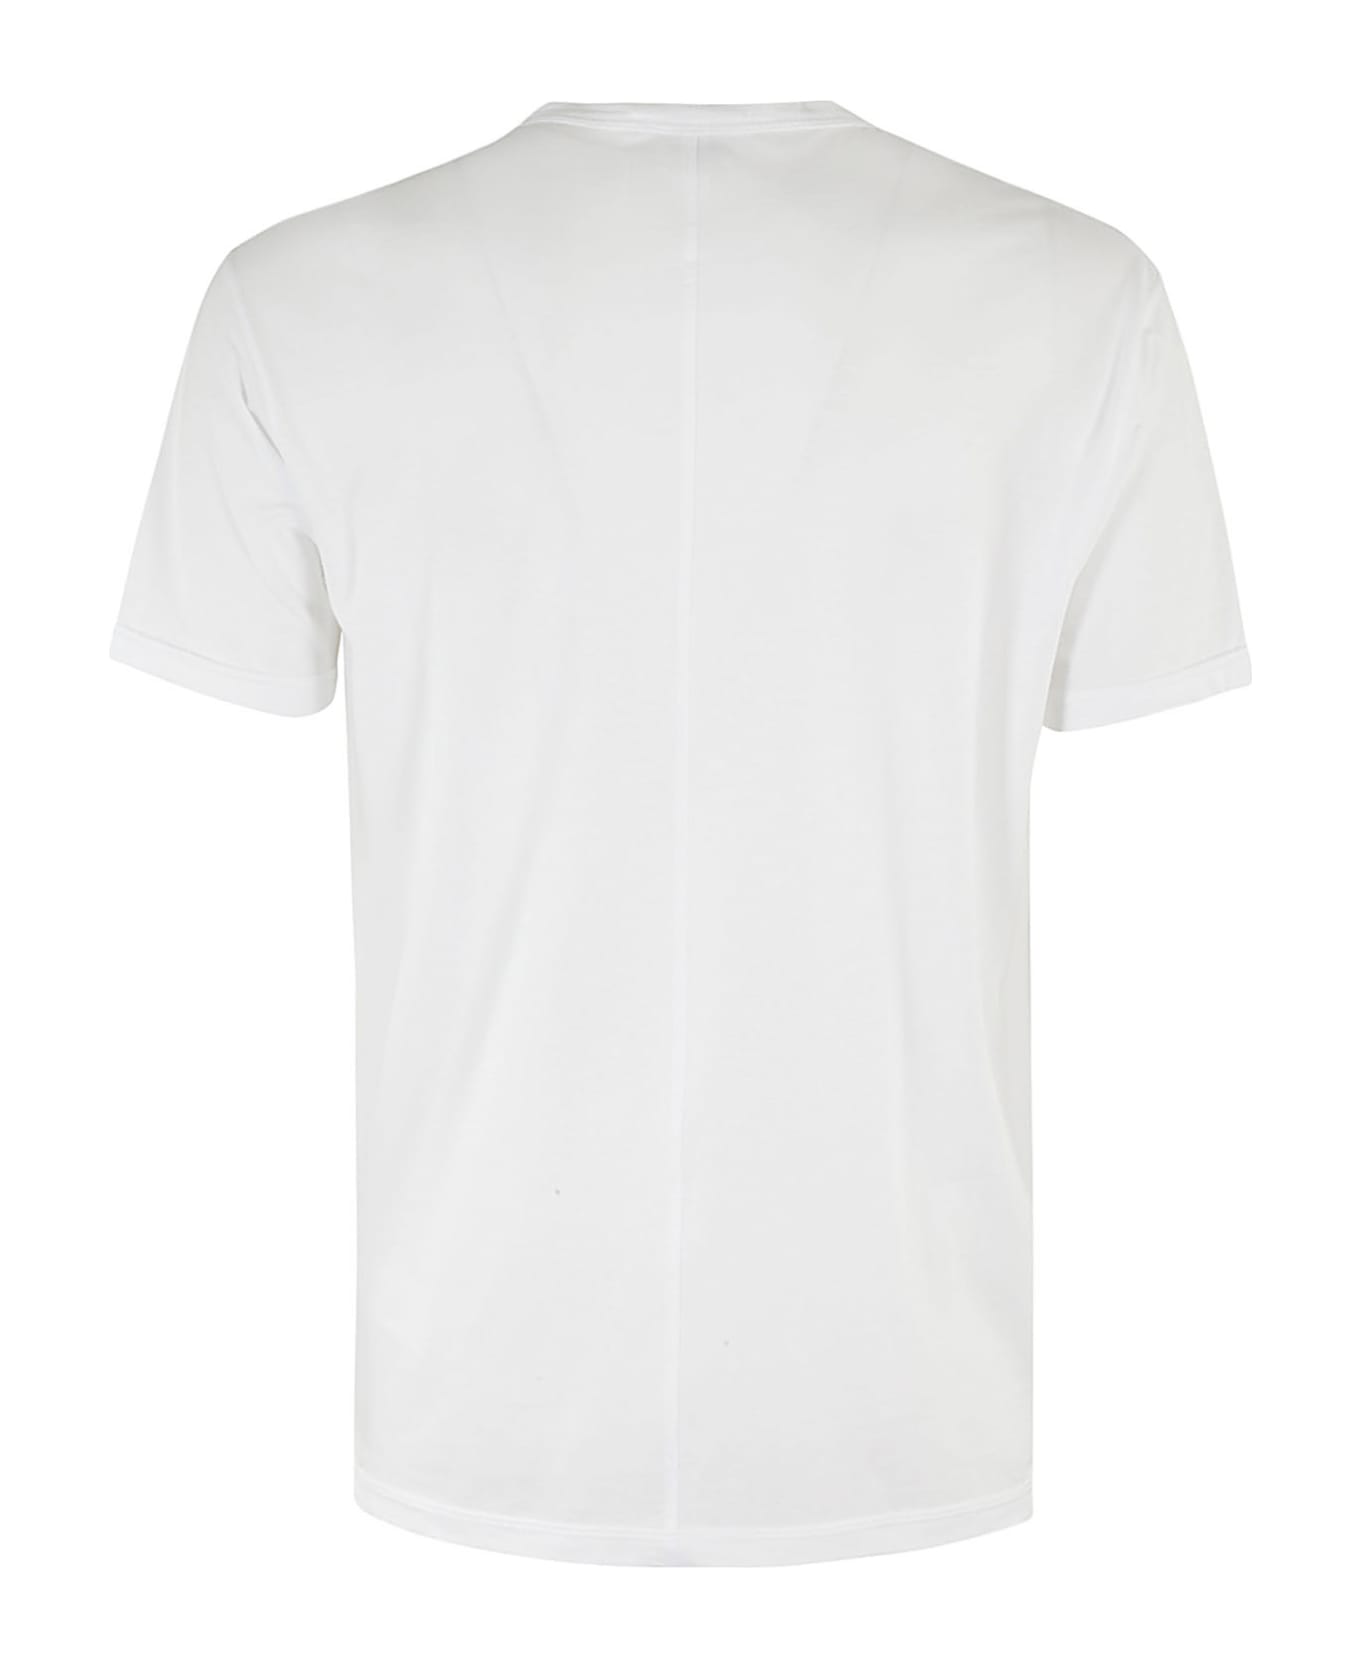 Paolo Pecora T Shirt Jersey - Bianco Ottico シャツ